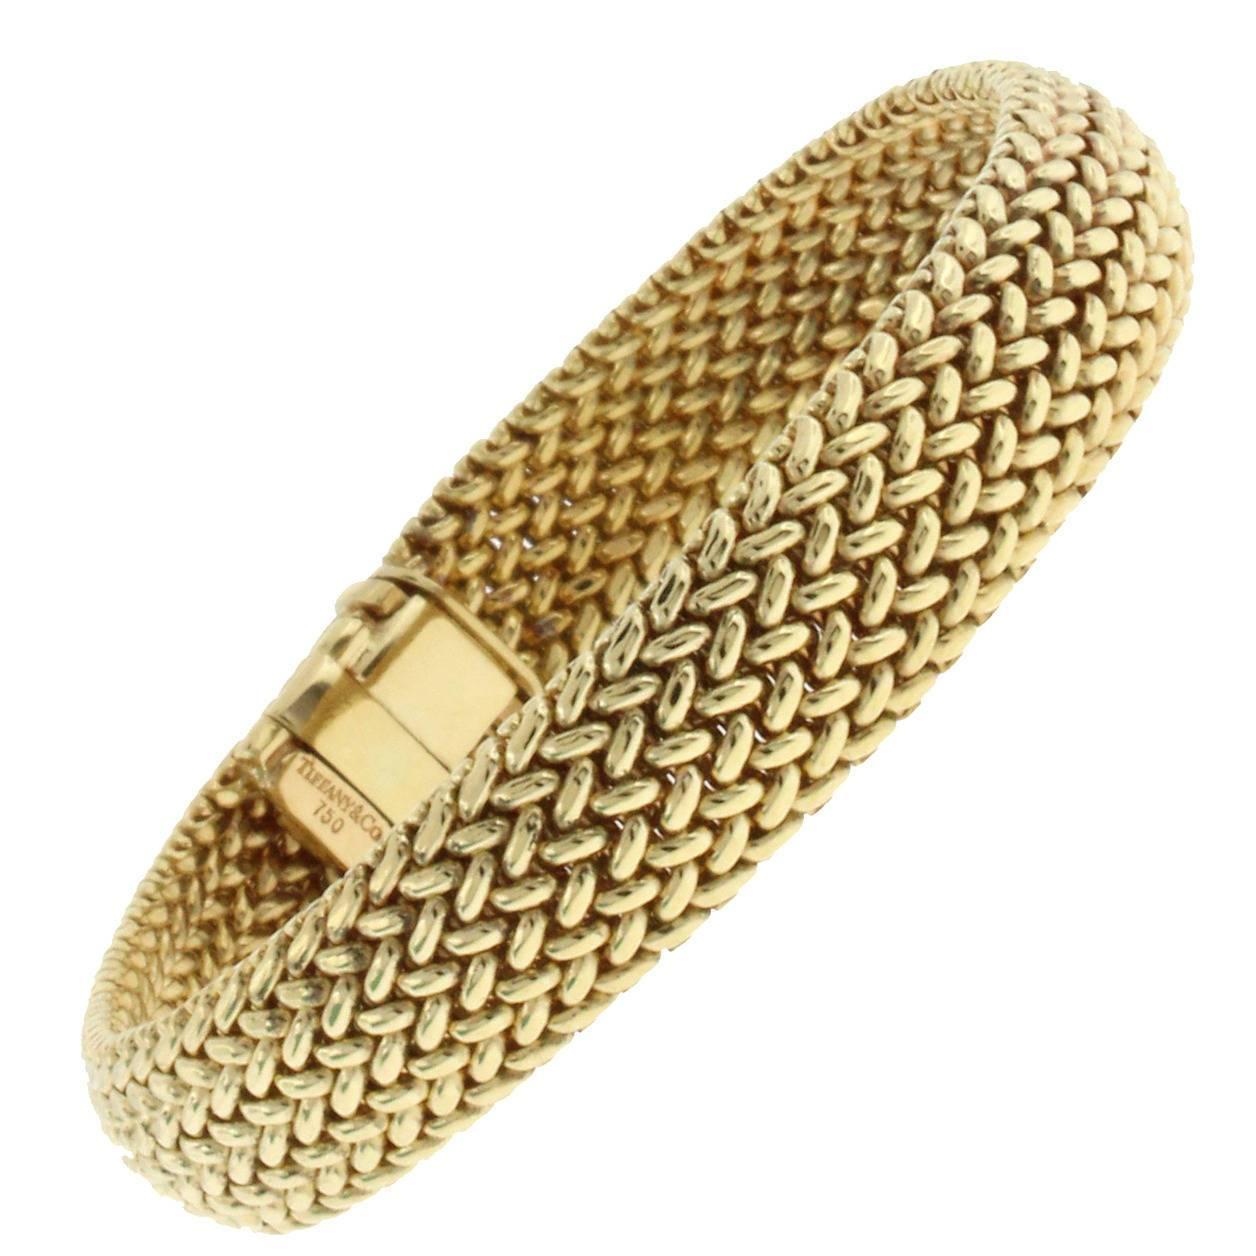 Tiffany & Co. gold Somerset Bracelet